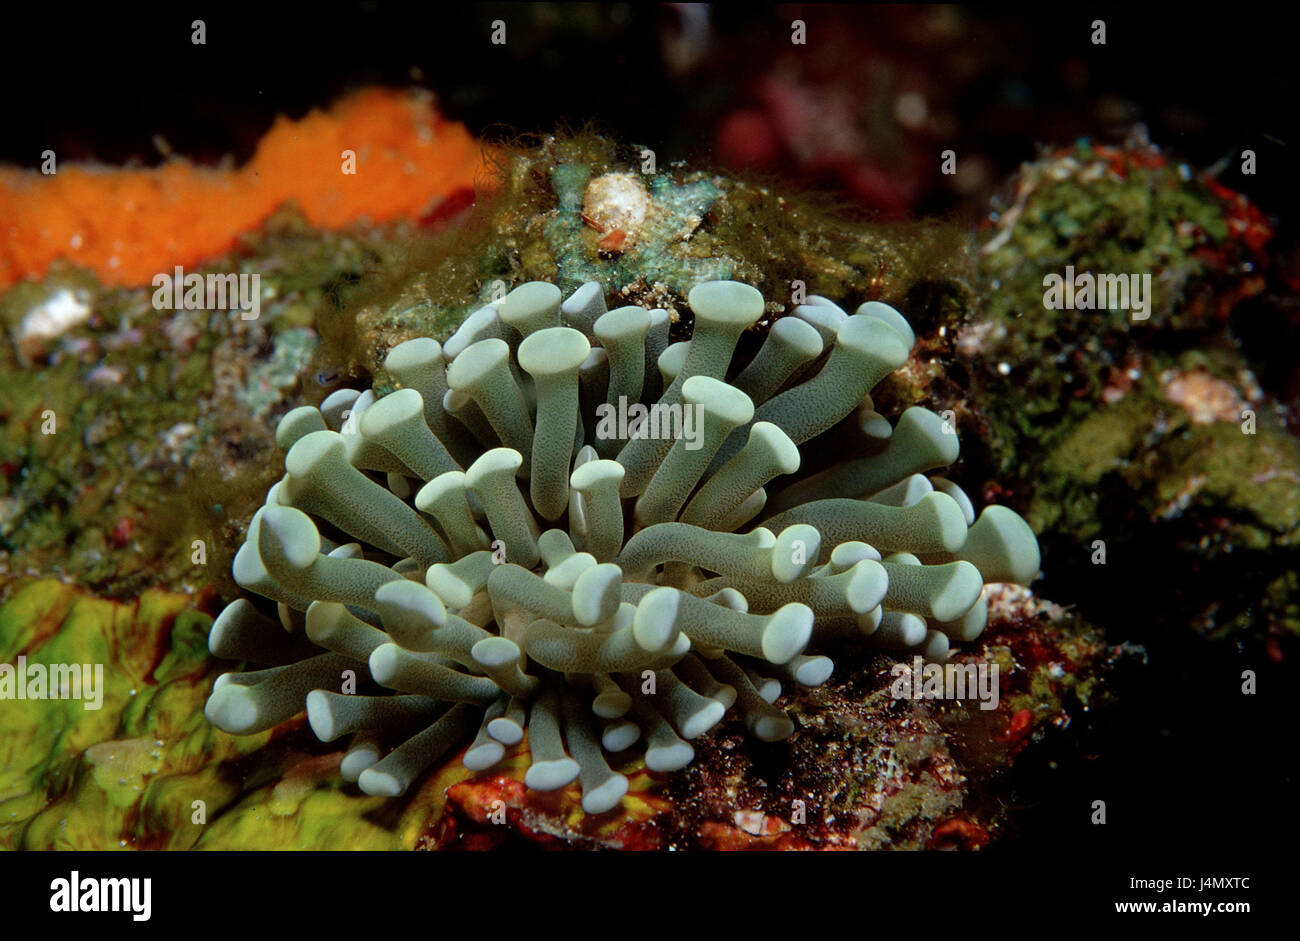 Coral reef, anemone, Heteractis sp. Stock Photo